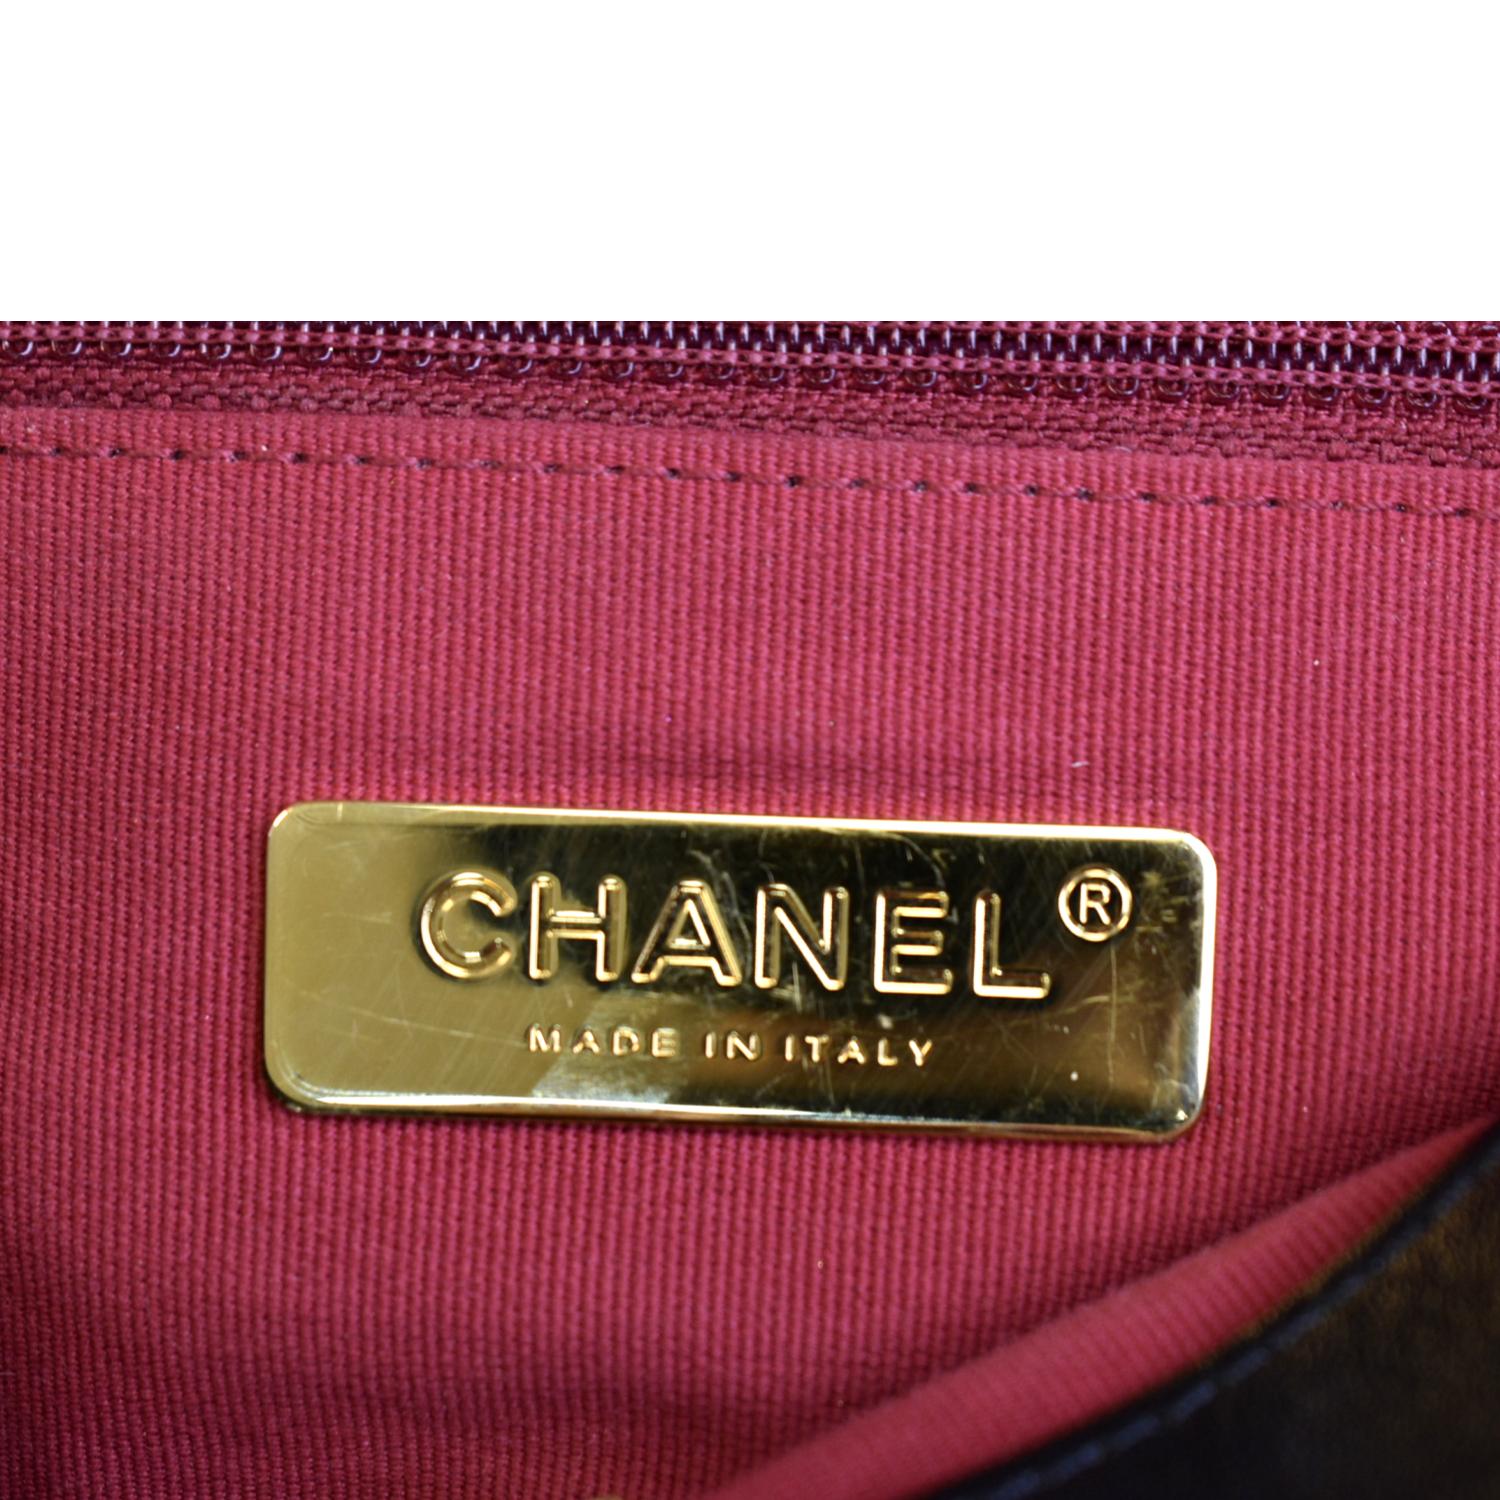 19 Bag help : r/chanel